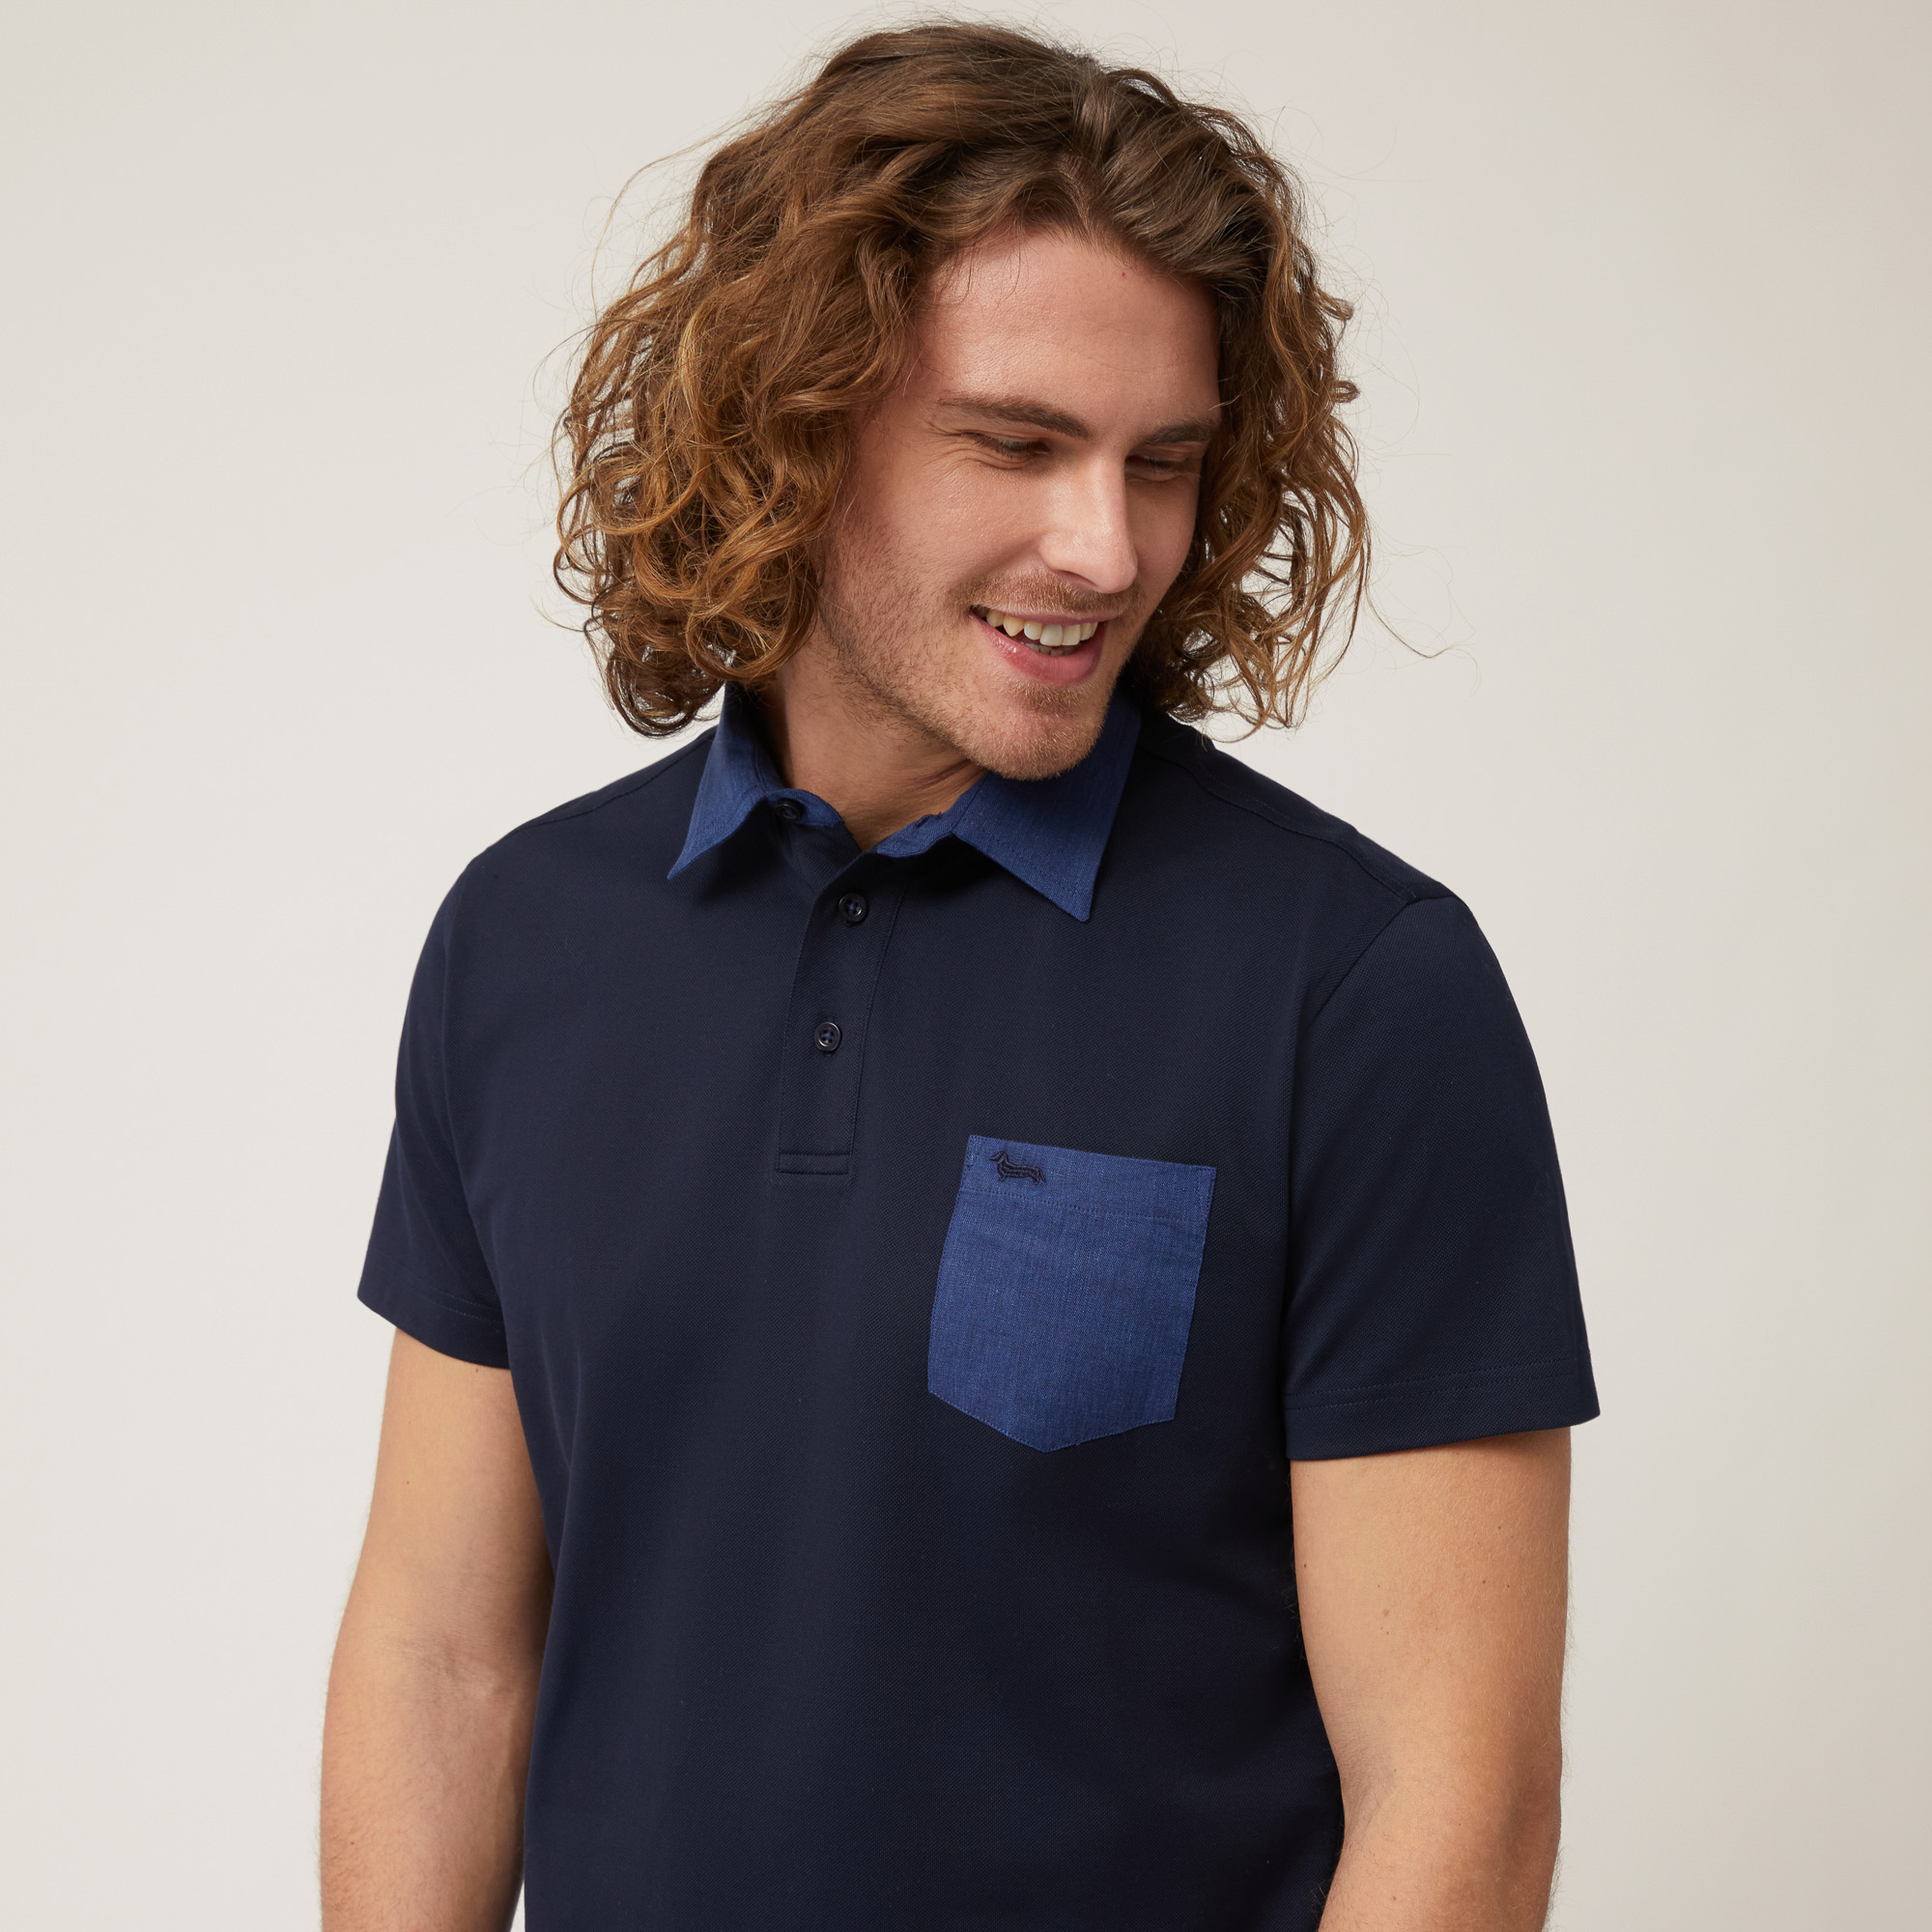 Poloshirt mit Brusttasche, Blau, large image number 2